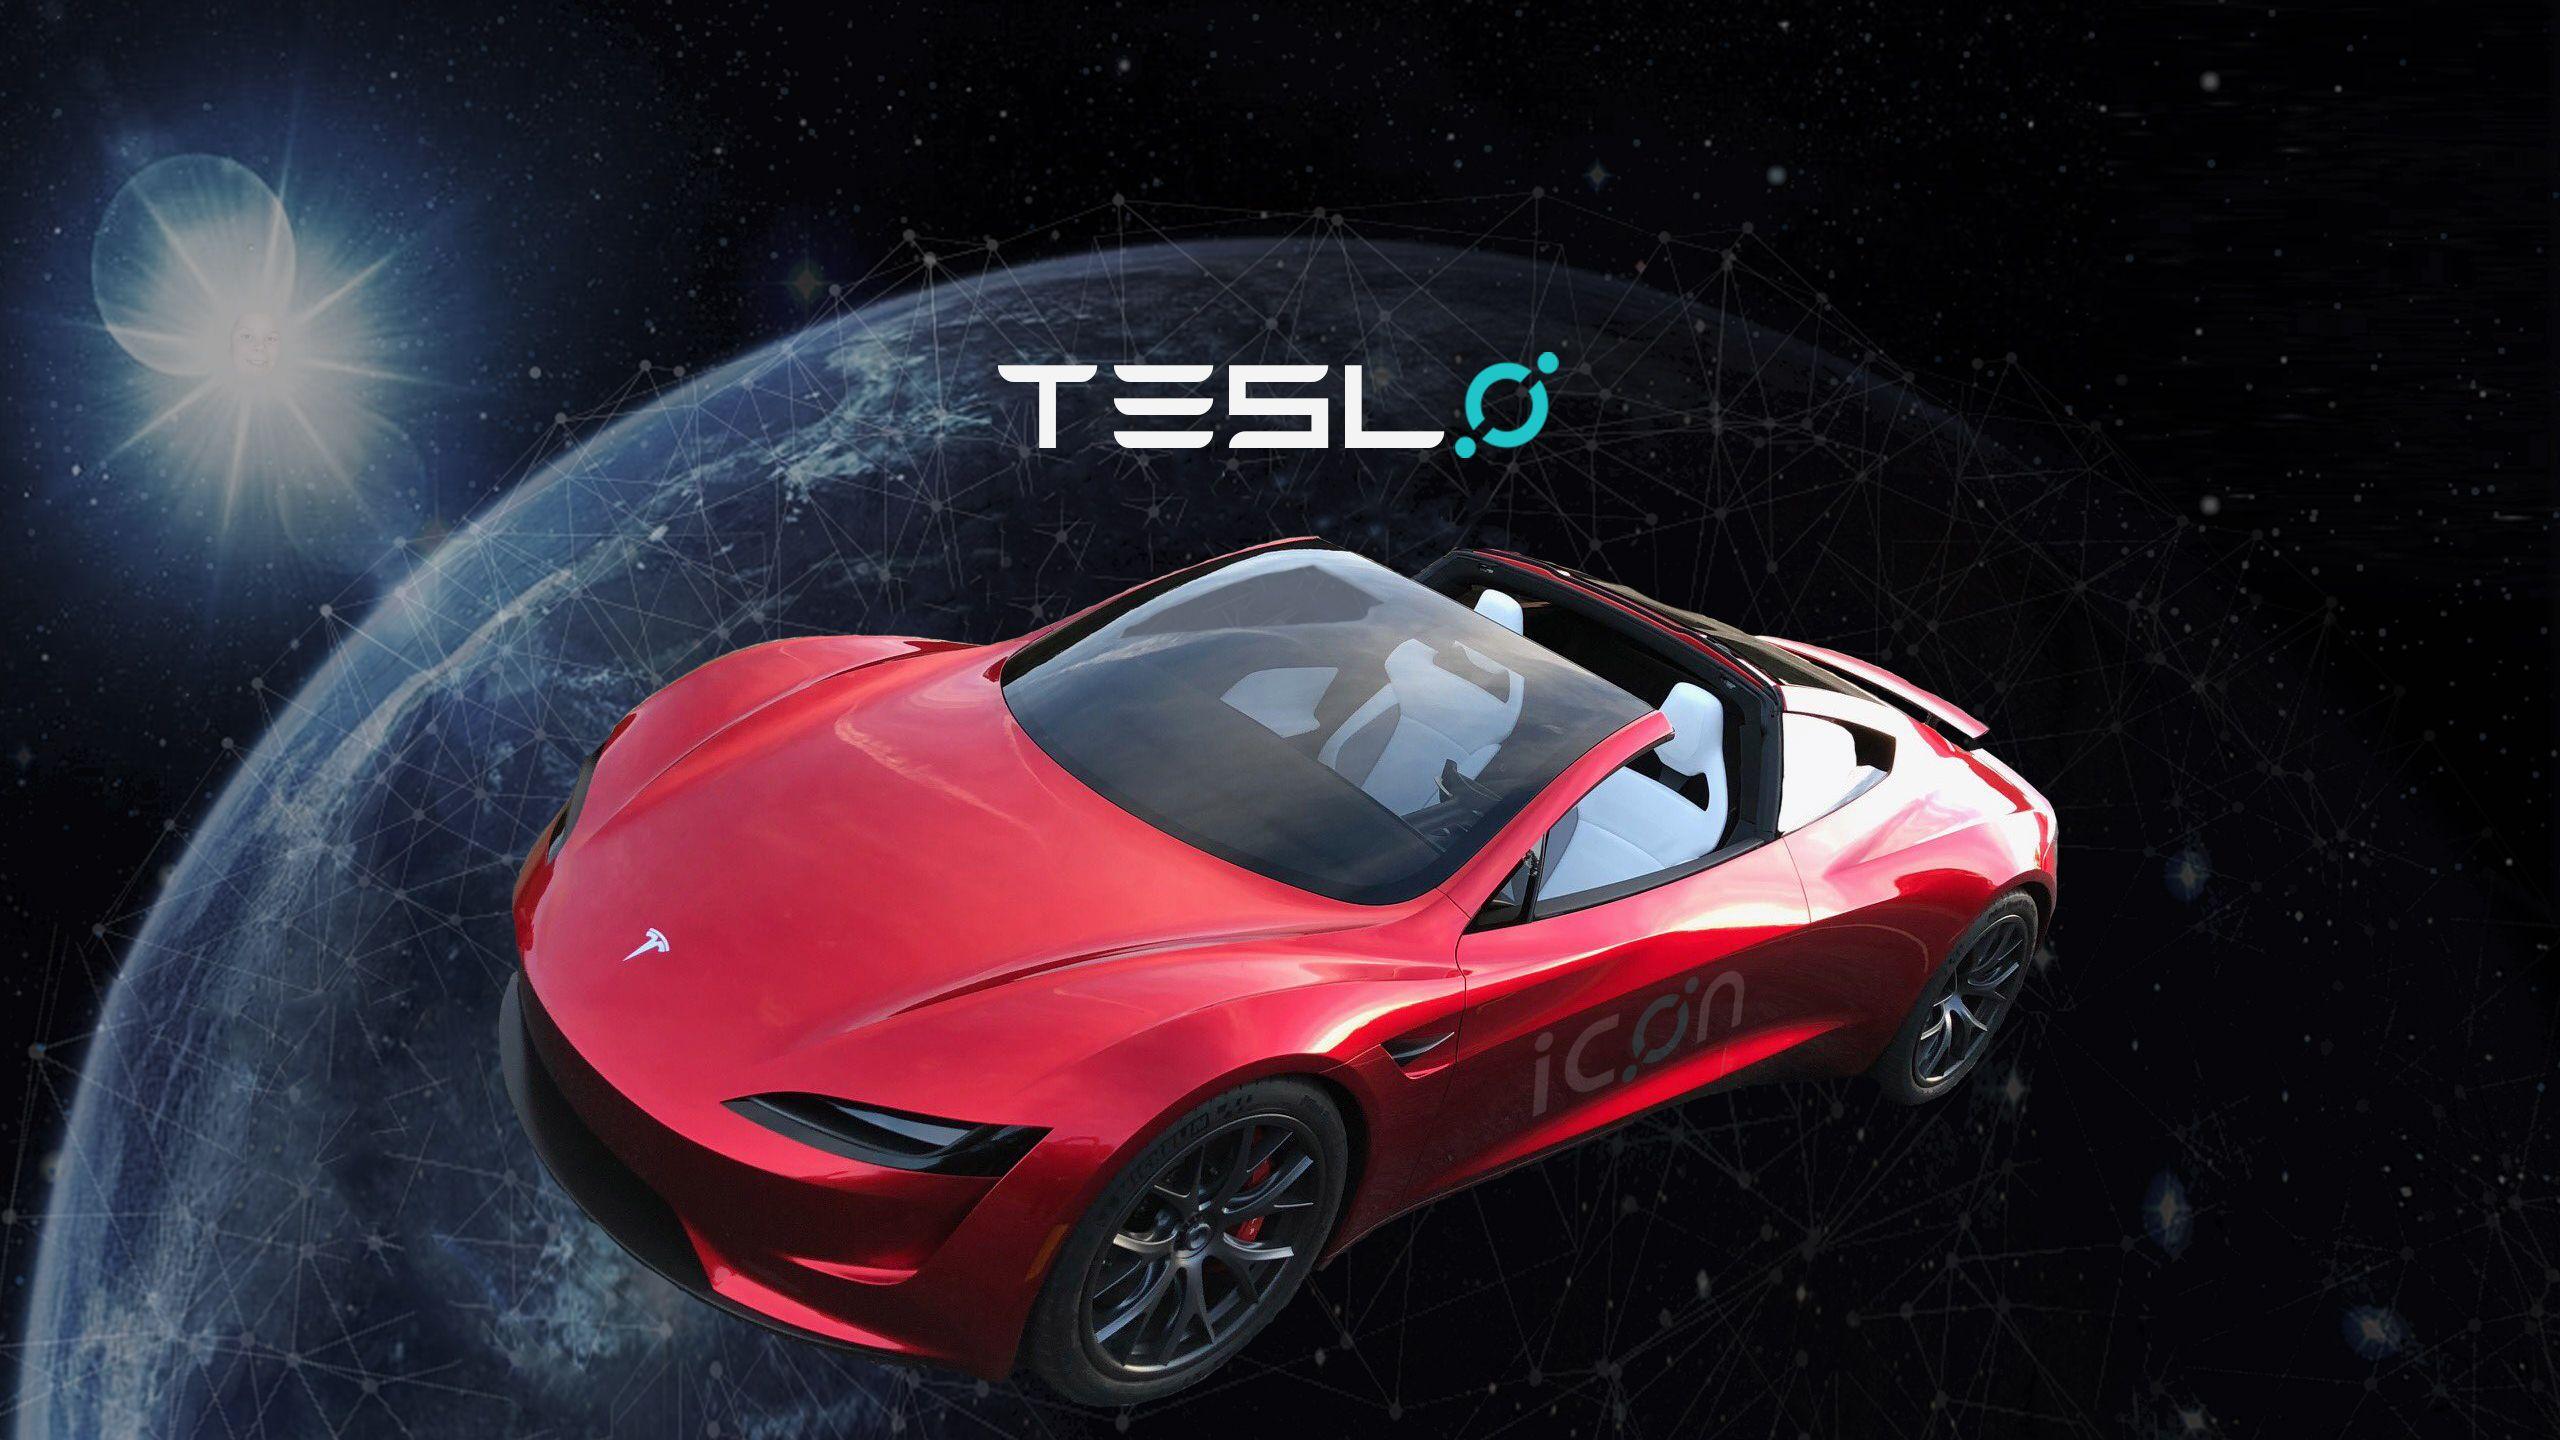 ICON (ICX) Tesla Roadster Crypto Wallpaper 2560x1440